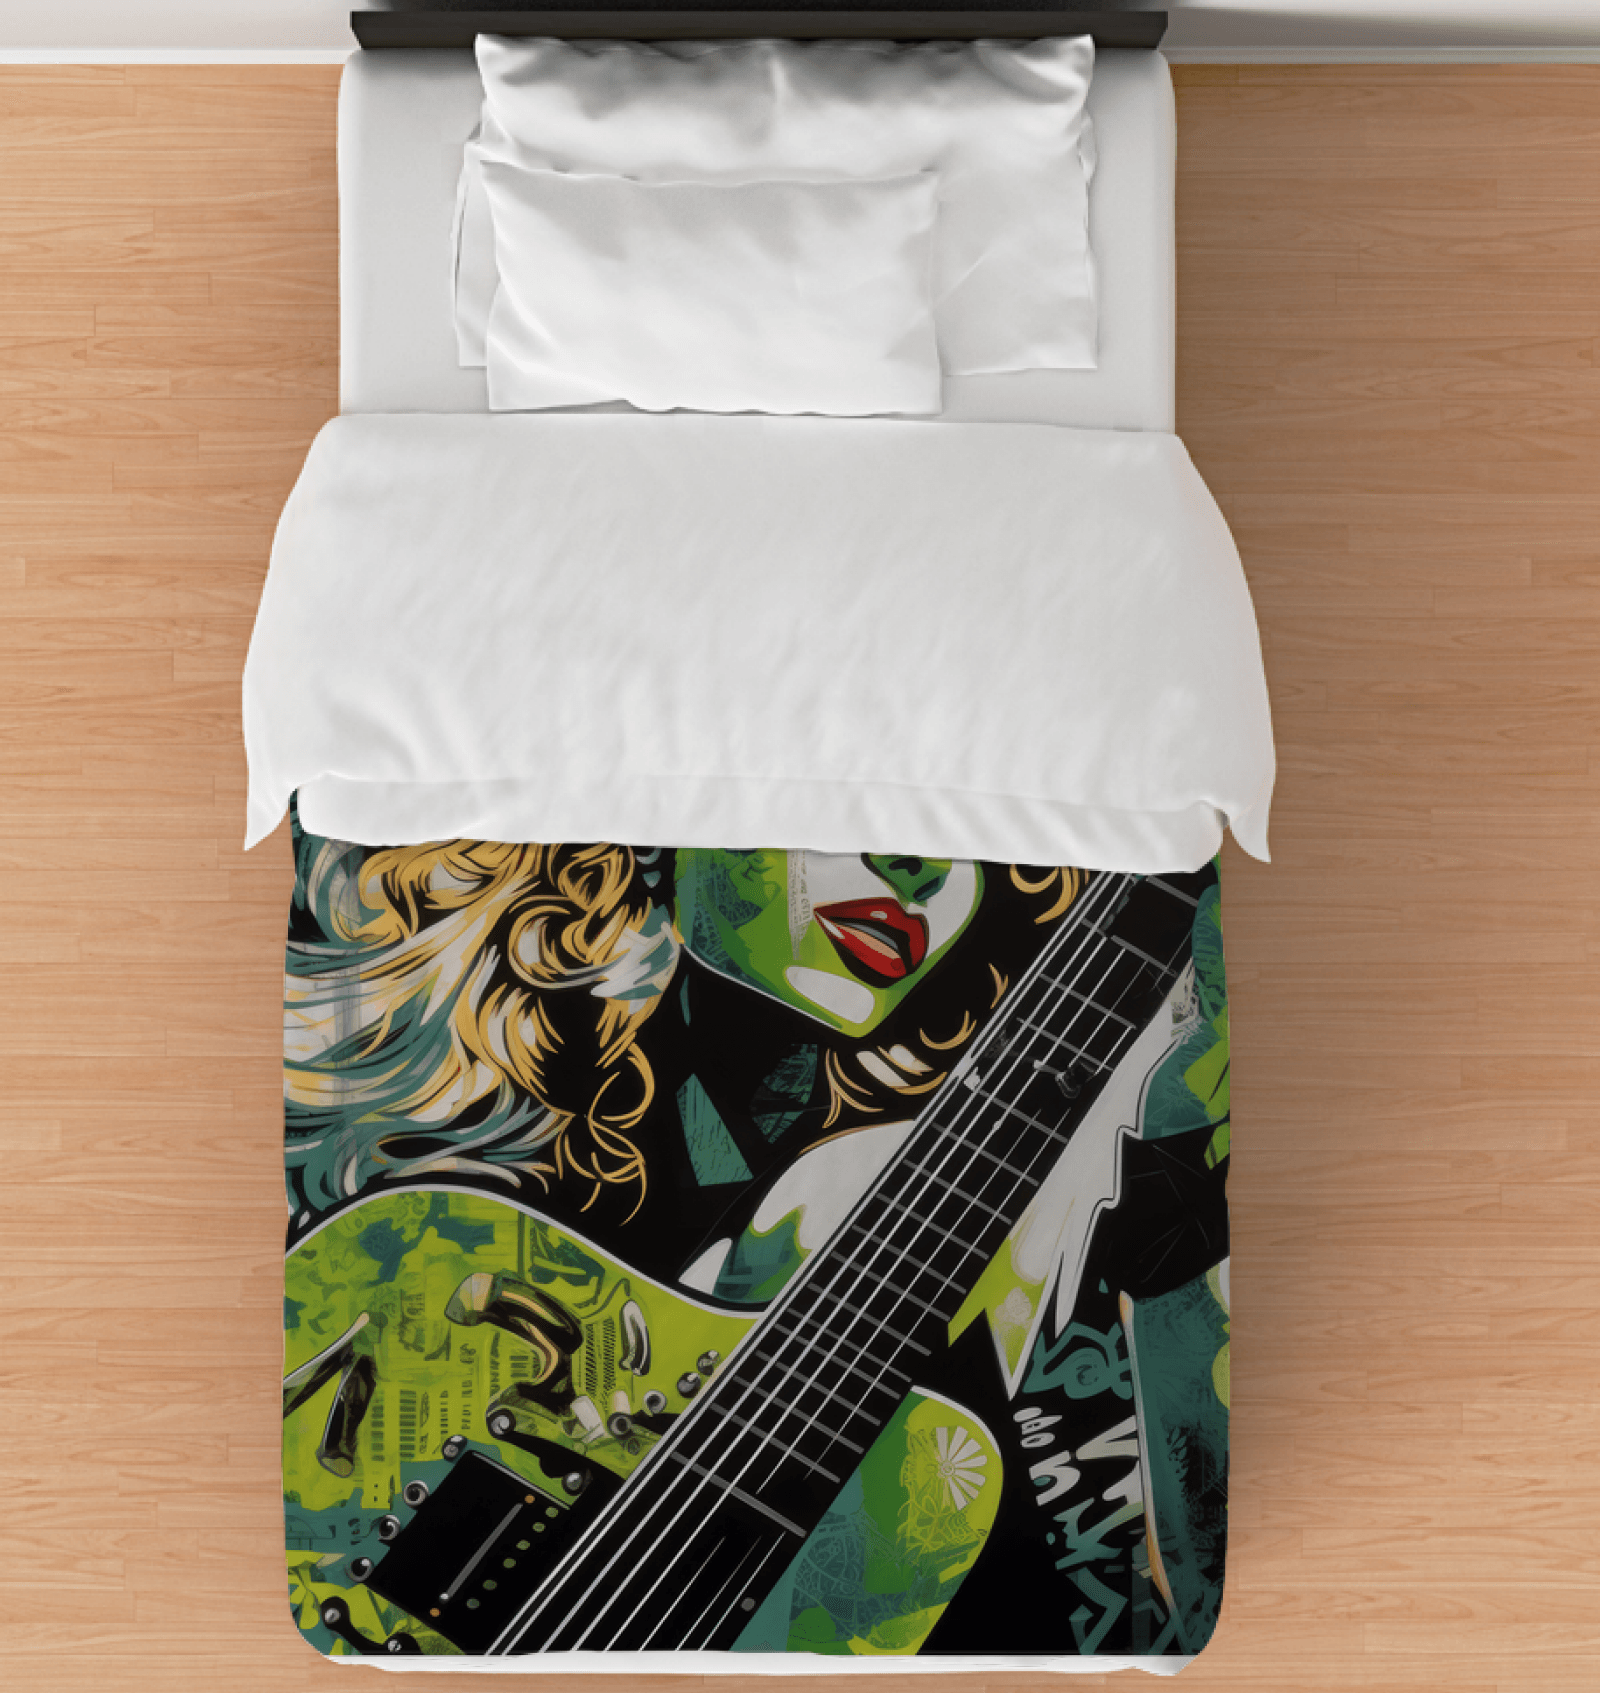 Rock 'n' Roll Inspired Bedding